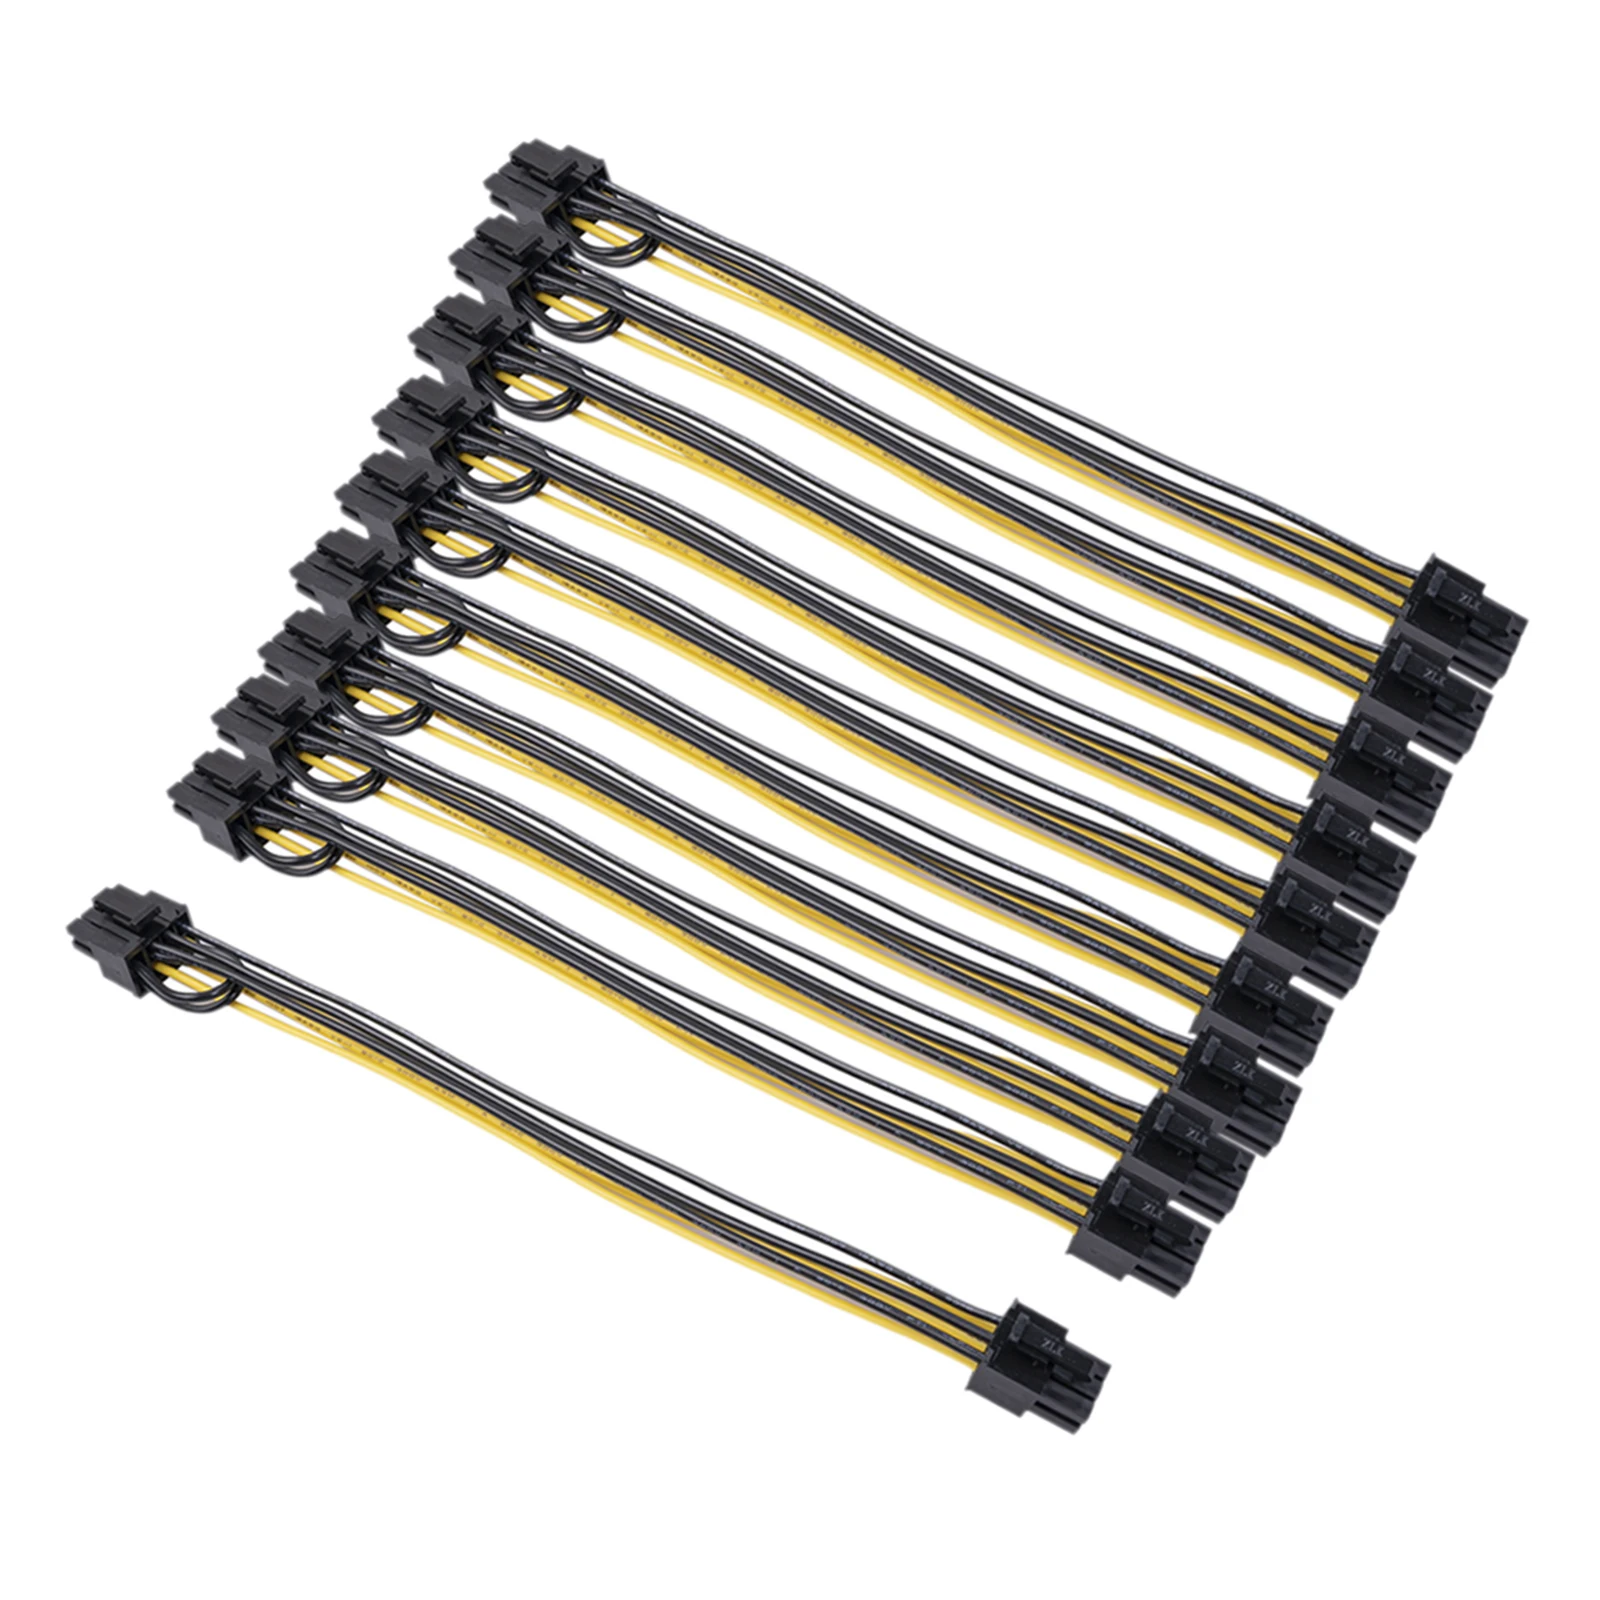 PCI Express PCIE PCI-e 6 pin Female to PCI-E 6+2 8 pin Female GPU Power Cable Splitter Adaptor Adapter Converter 20CM